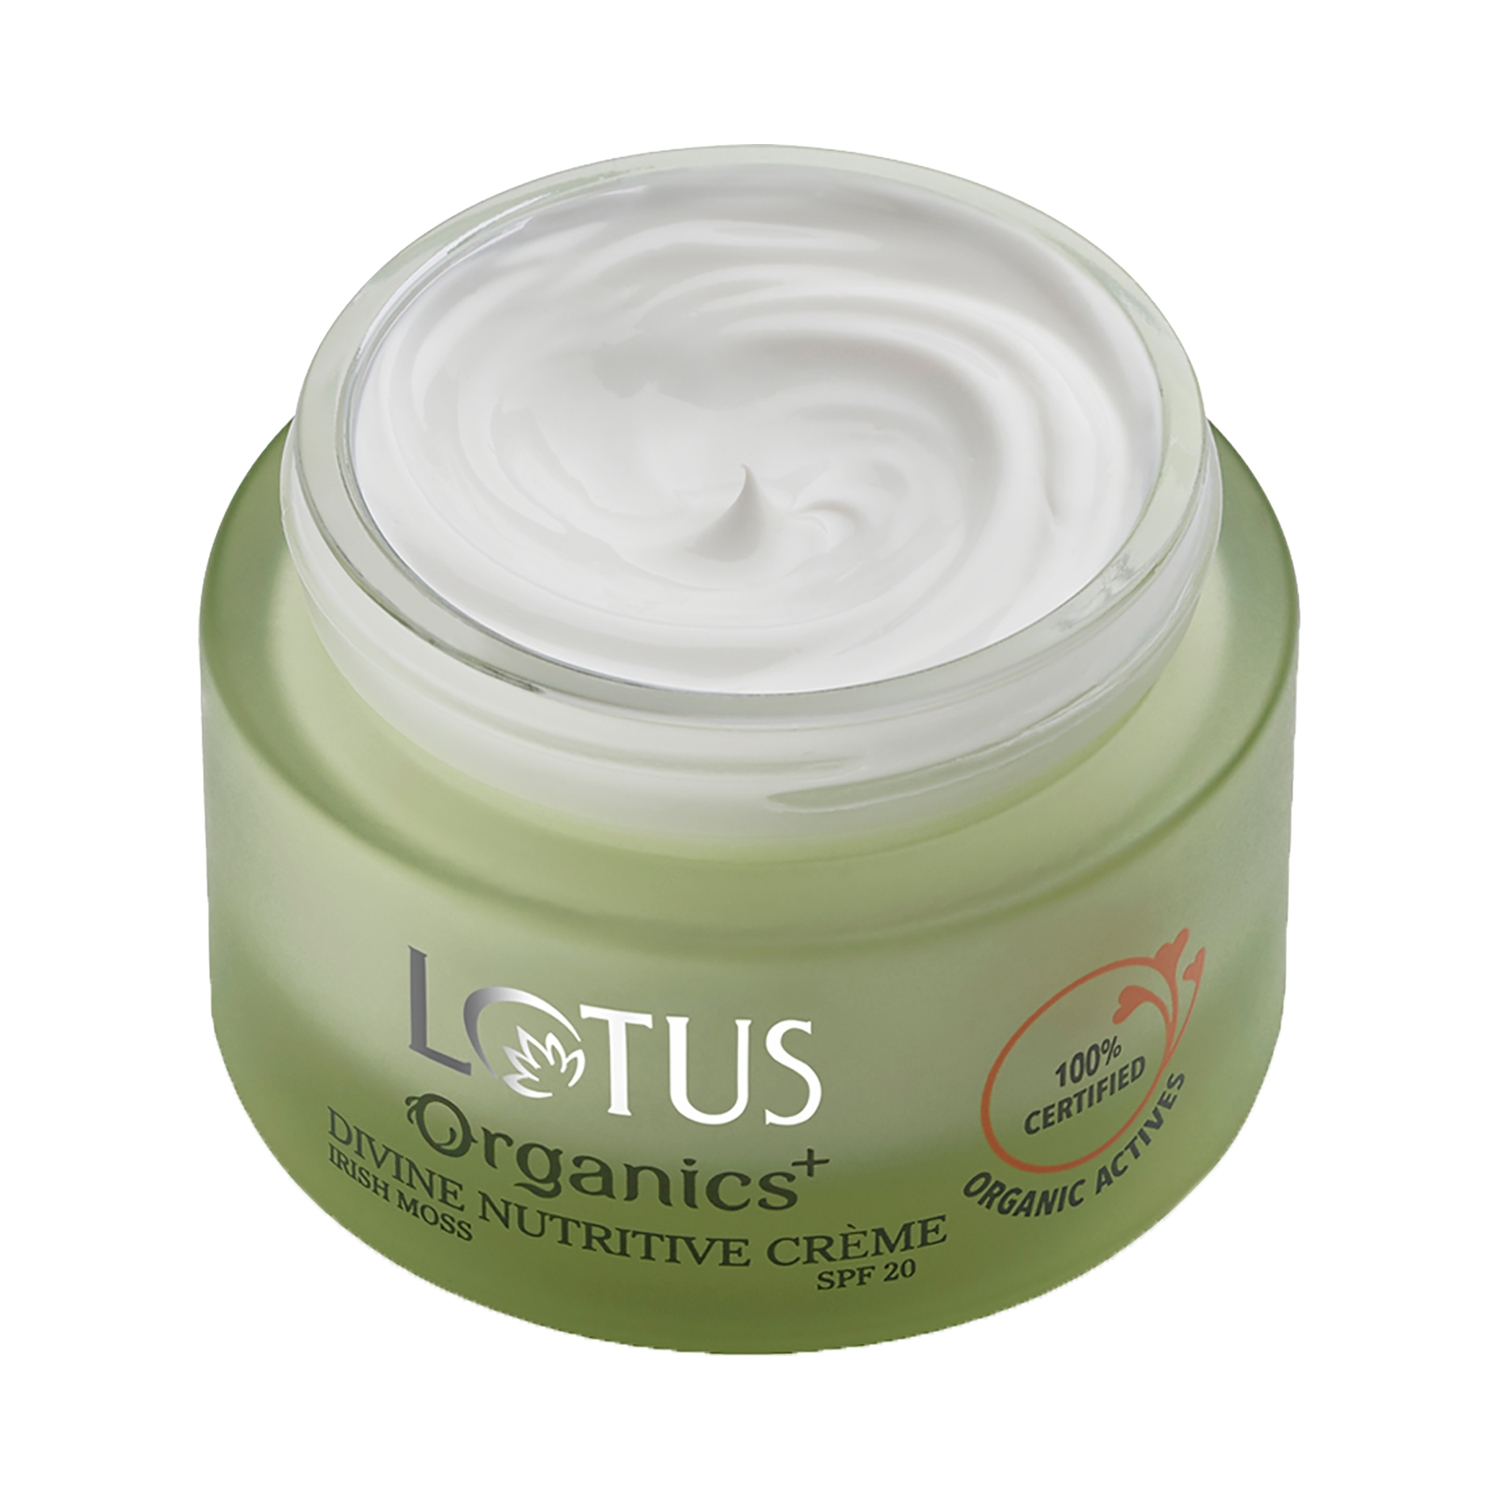 Lotus Organics | Lotus Organics Divine Nutritive Creme SPF 20 (50g)